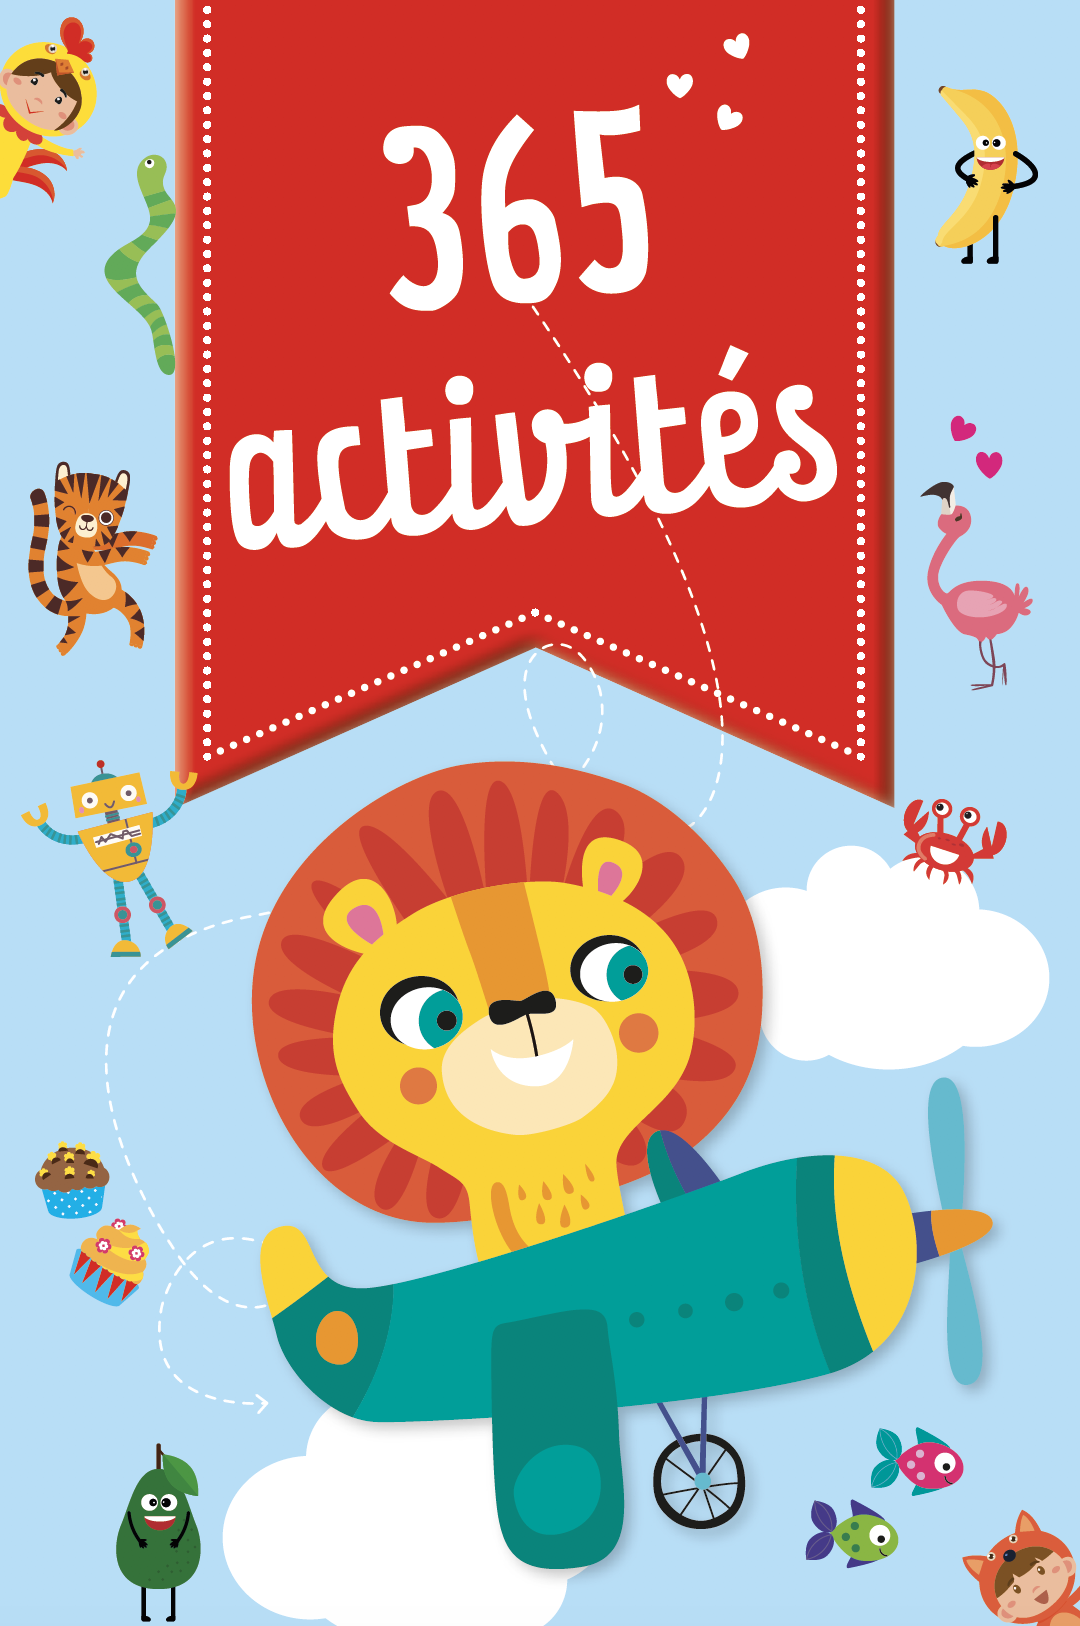 365 Activities - cover